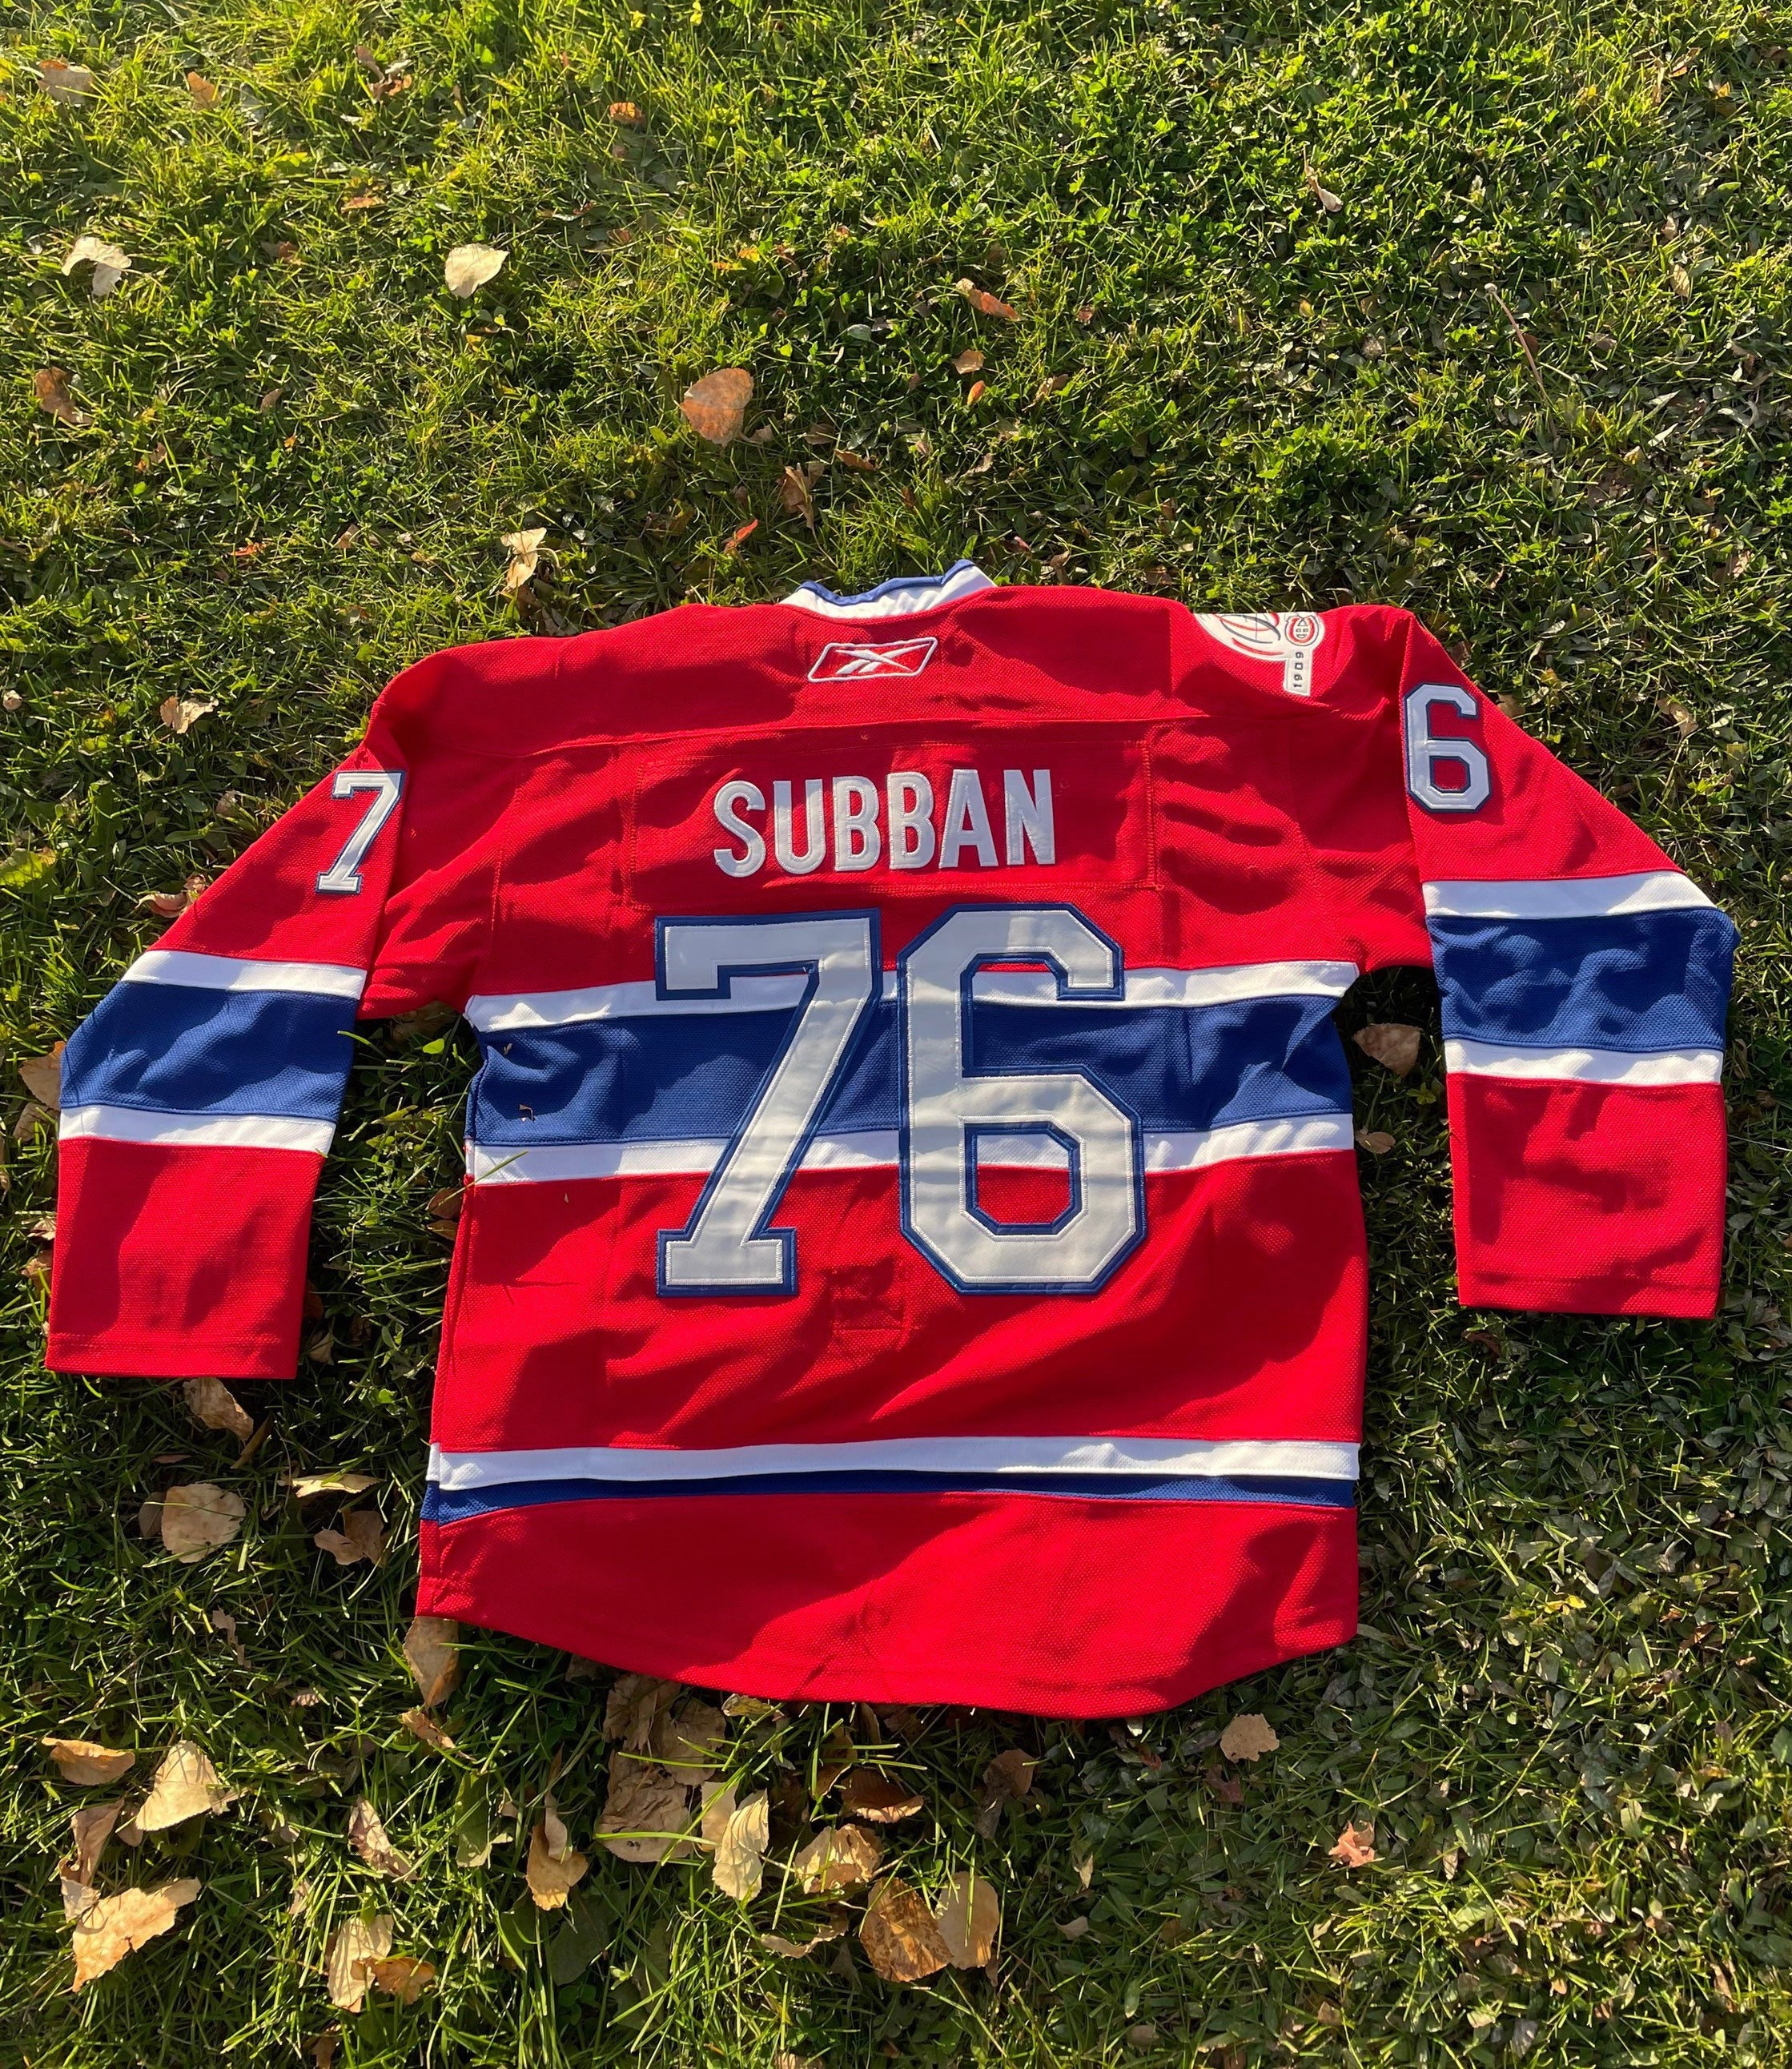 PK Subban Montreal Canadiens 2 Card Framed Set 